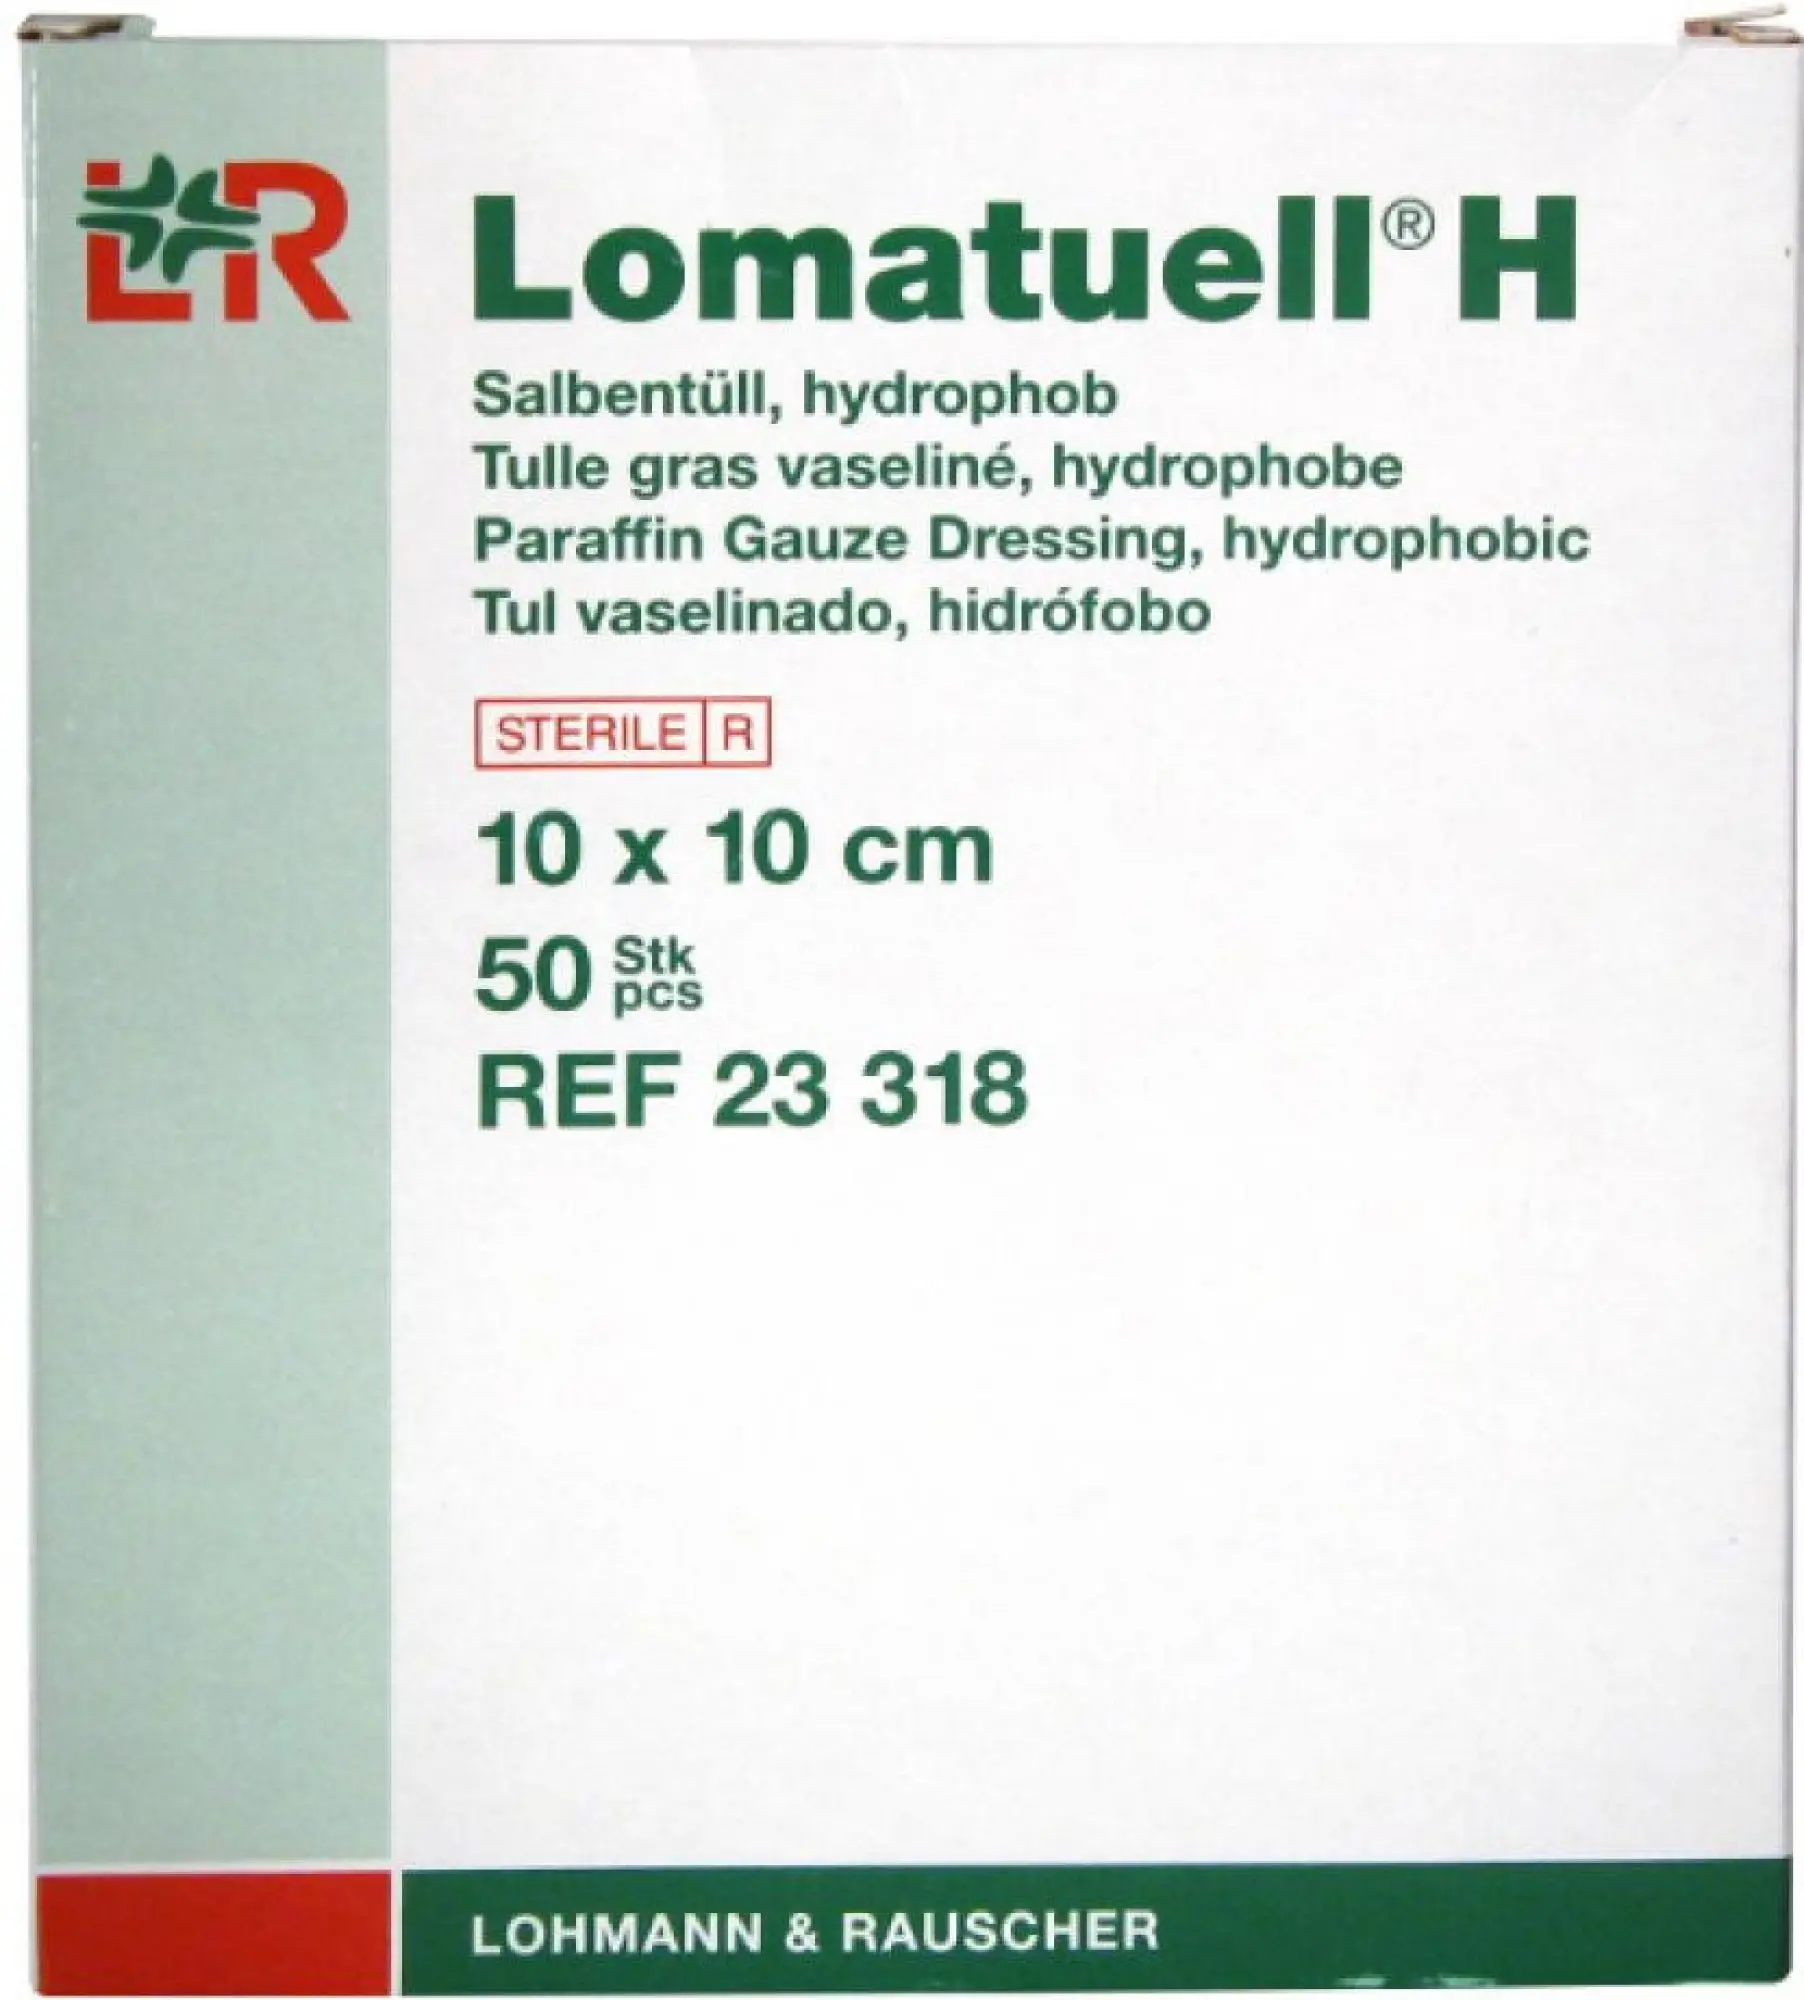 Lomatuell H Tyl mastný 10 x 10 cm 50 ks